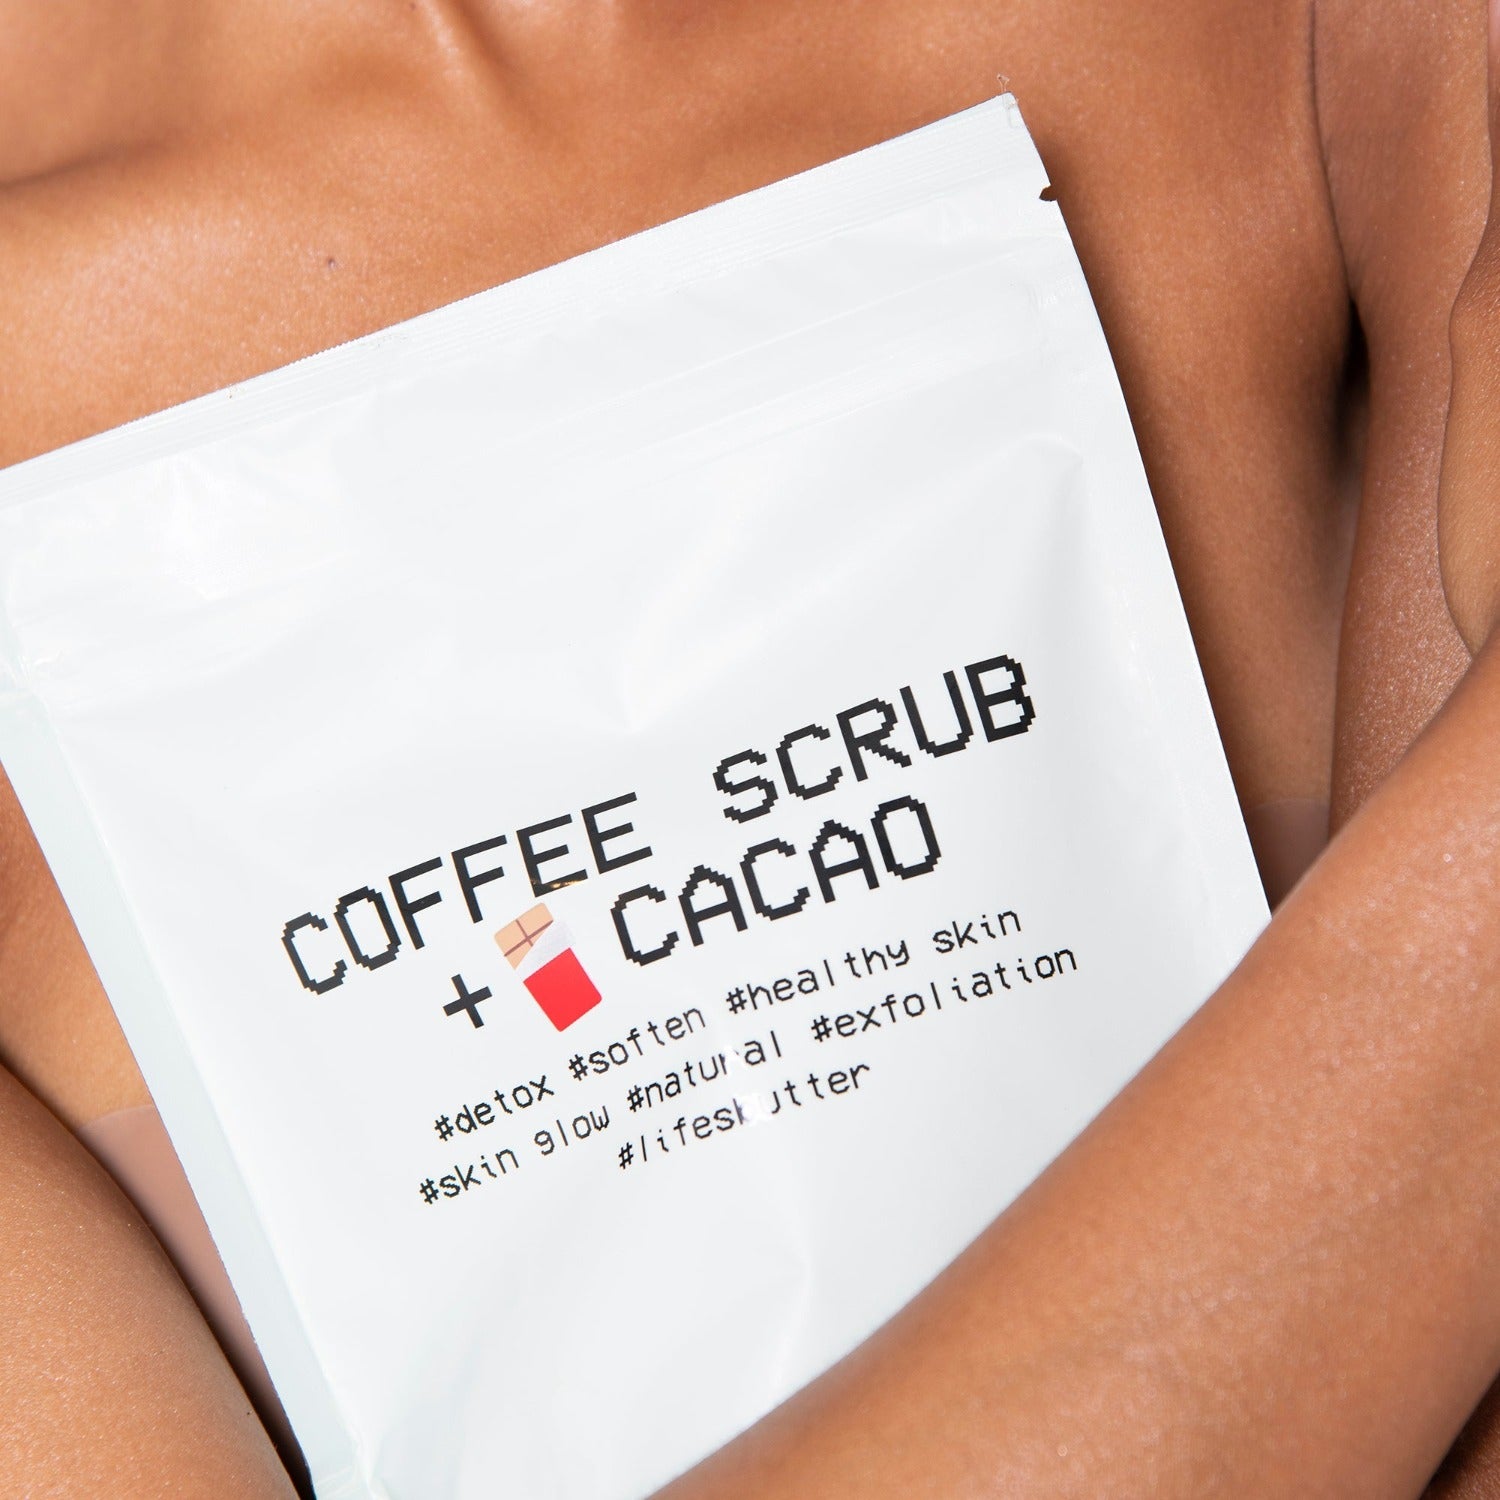 #Detox Coffee Scrub with Cacao Coffee Scrub Life's Butter 